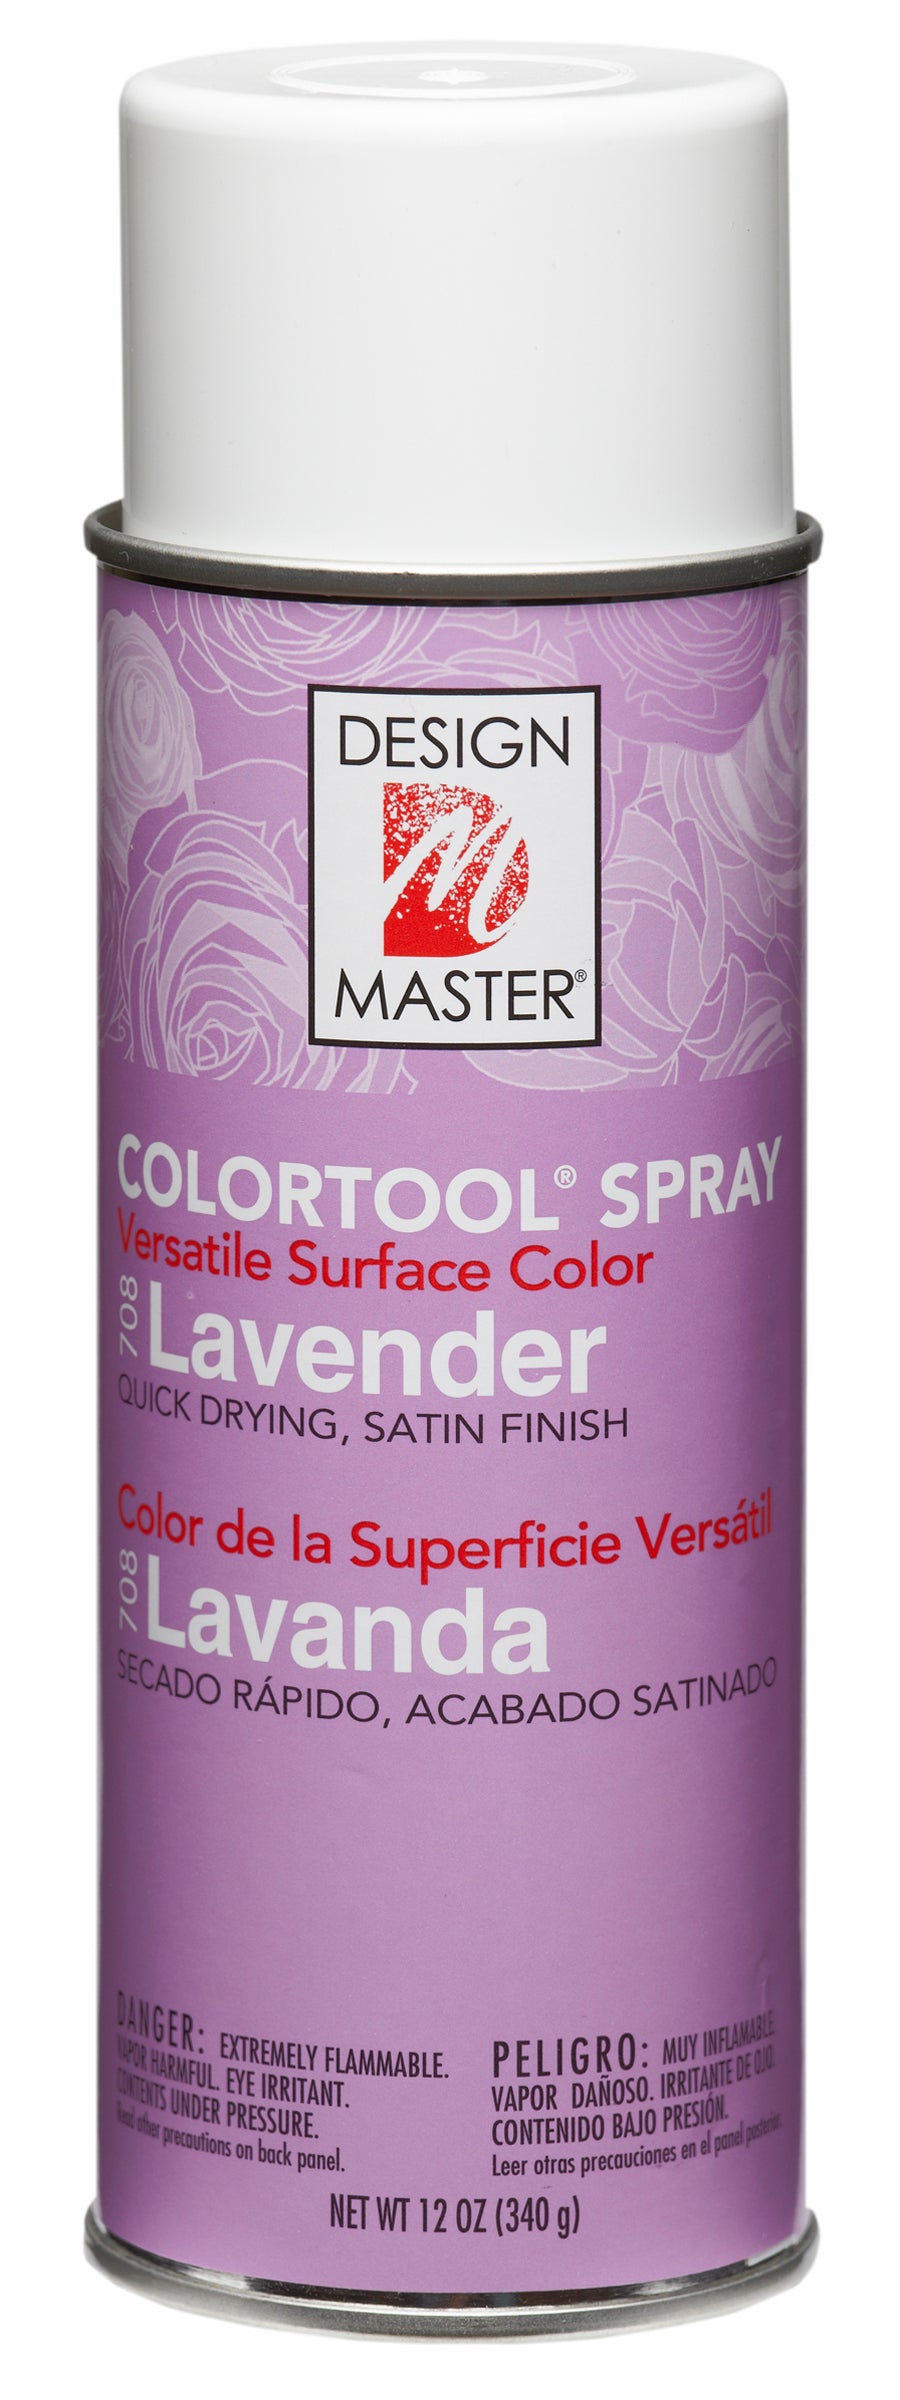 Design Master Colortool Spray-Lavender